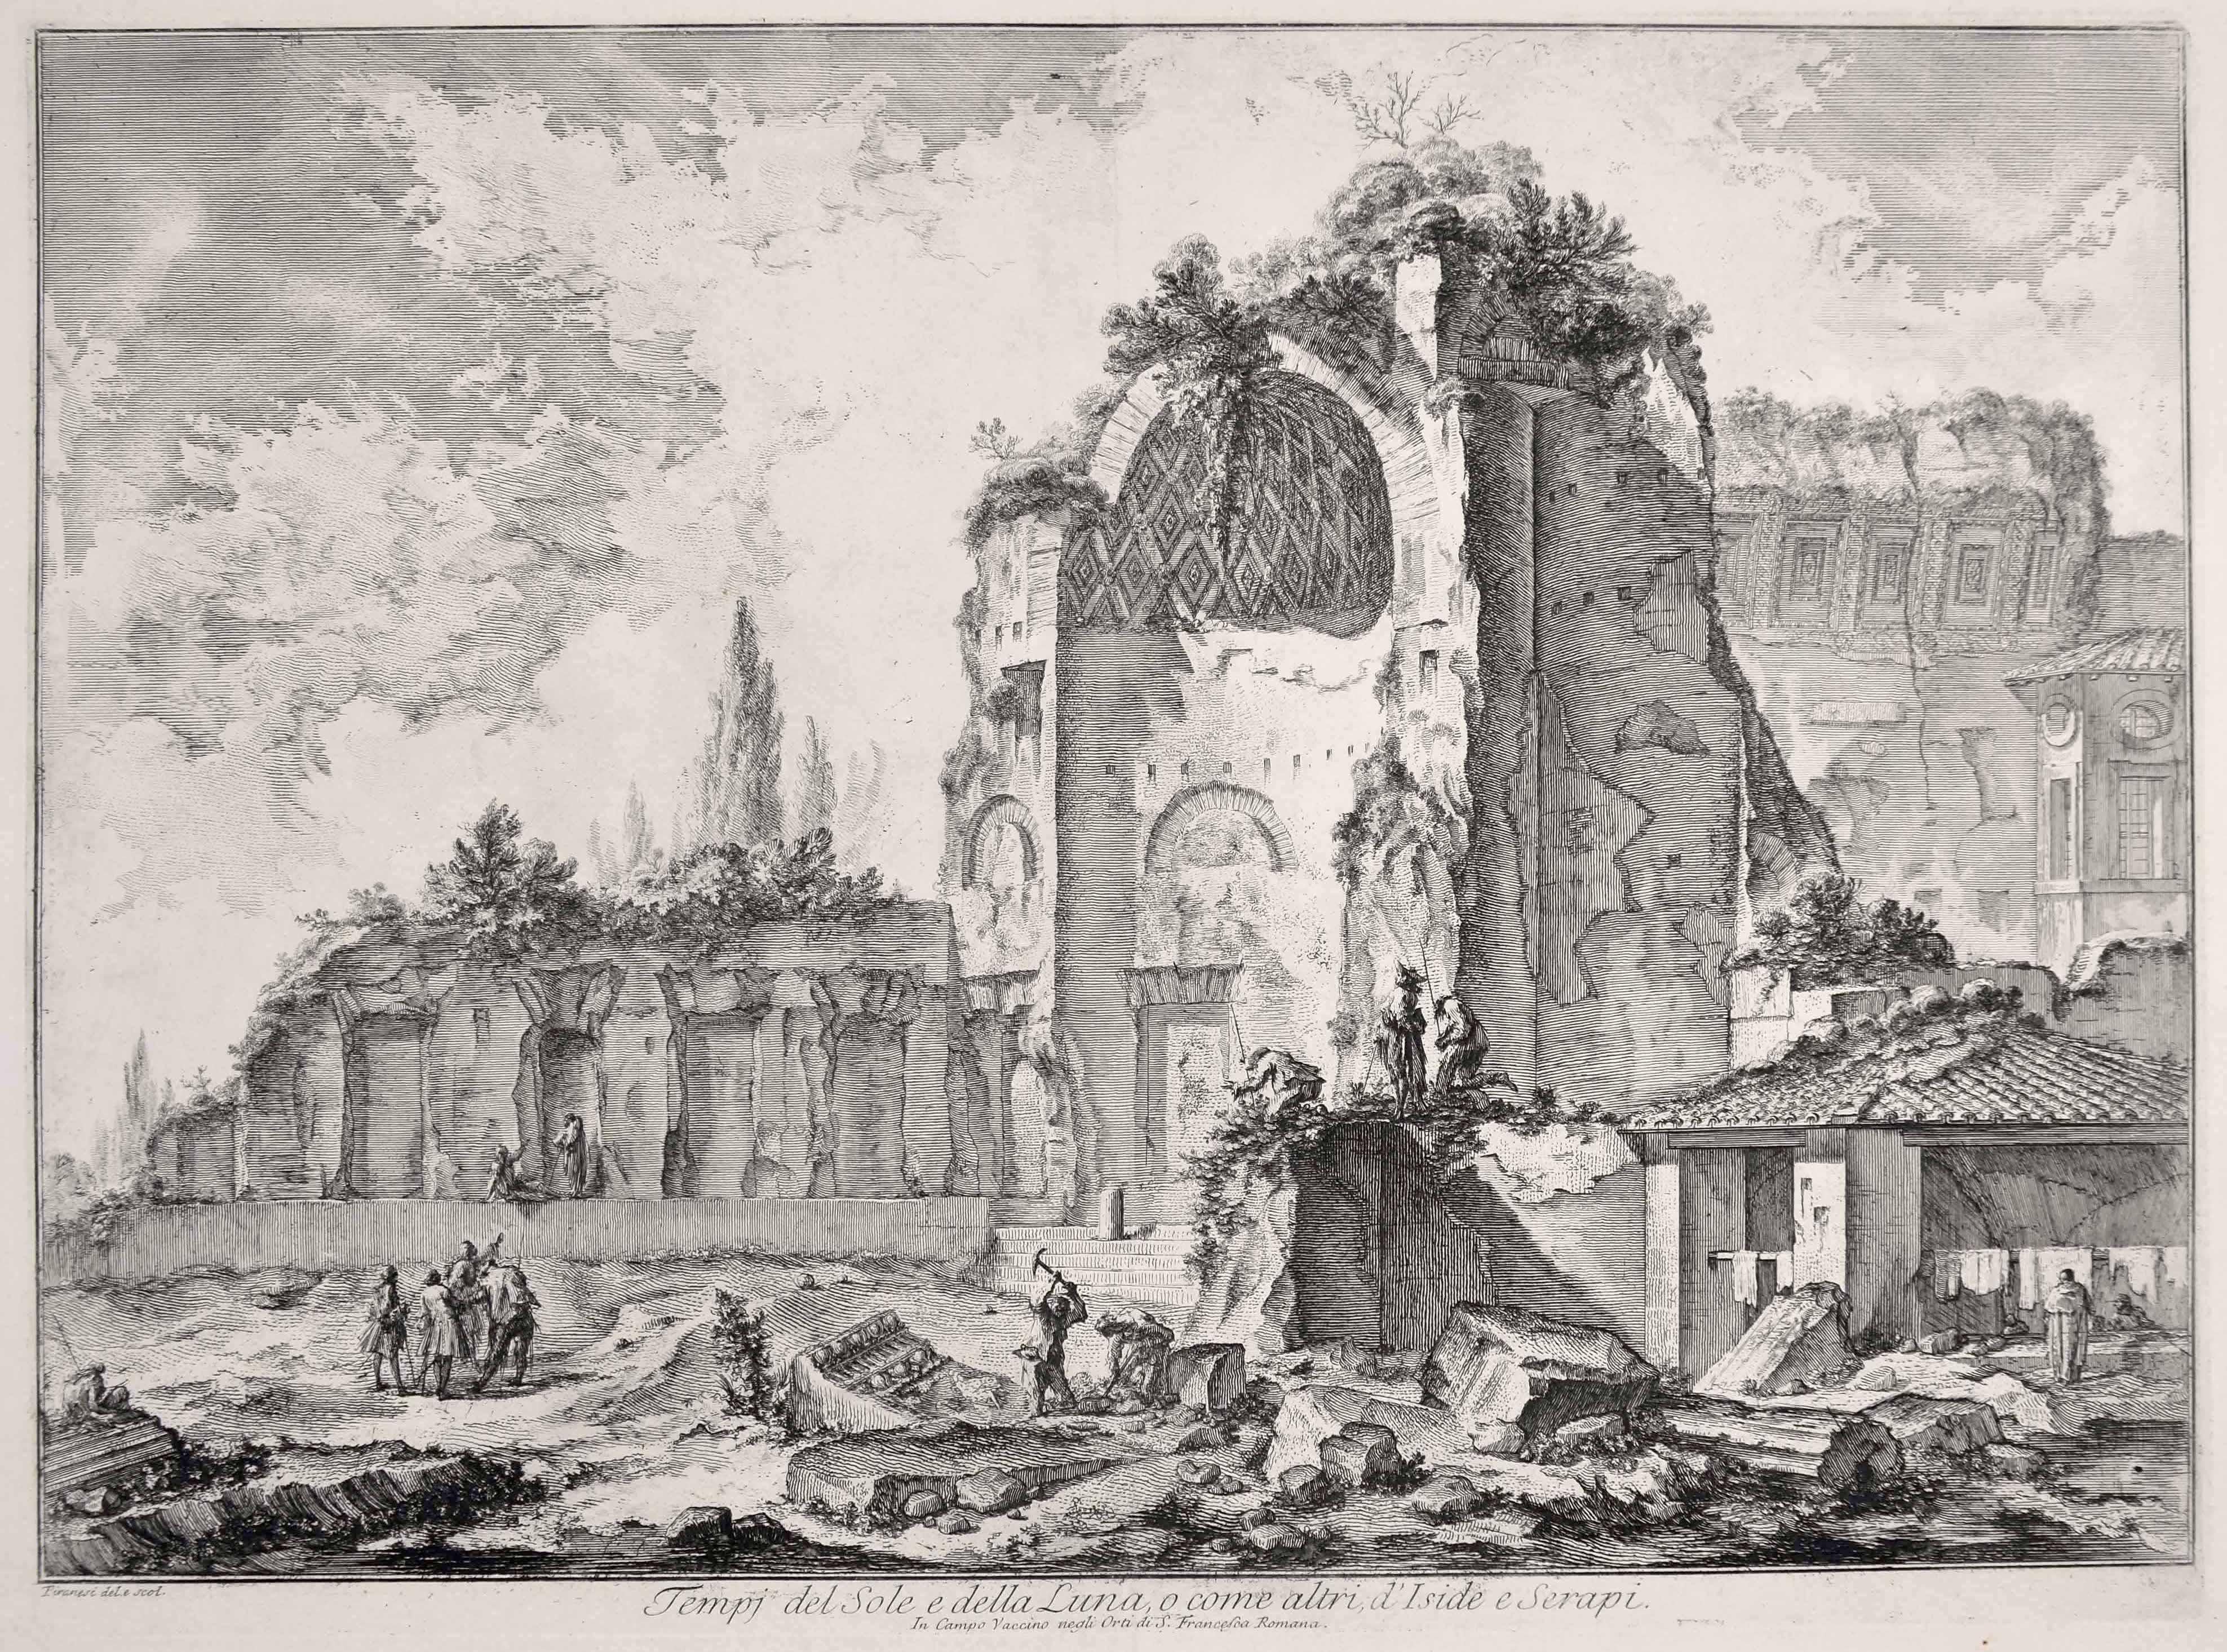 Giovanni Battista Piranesi Landscape Print - Temples of Iside and Serapi - Etching by G. B. Piranesi - 1759